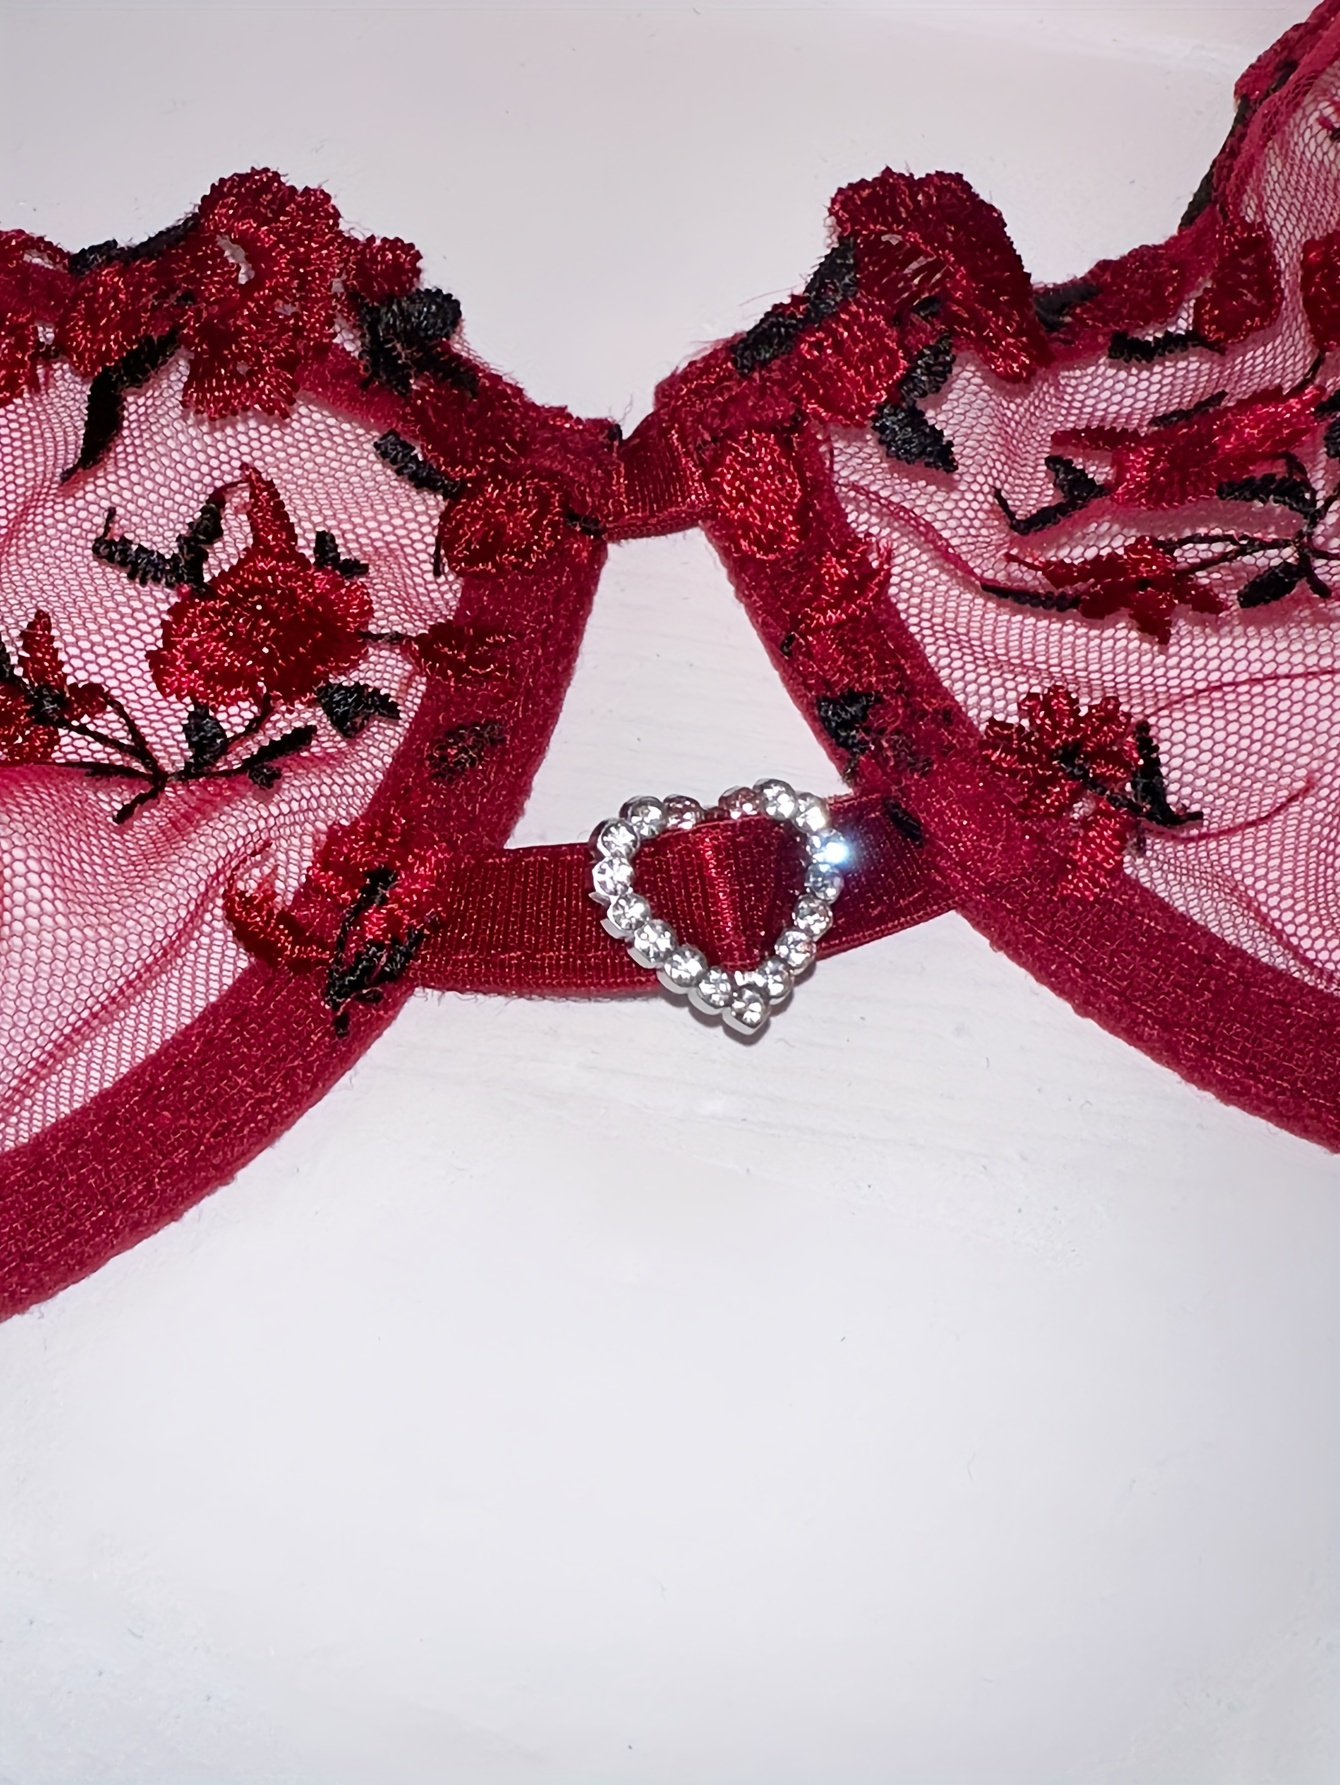 LADIES SECRET new red mesh bras lace women embroidery transparent